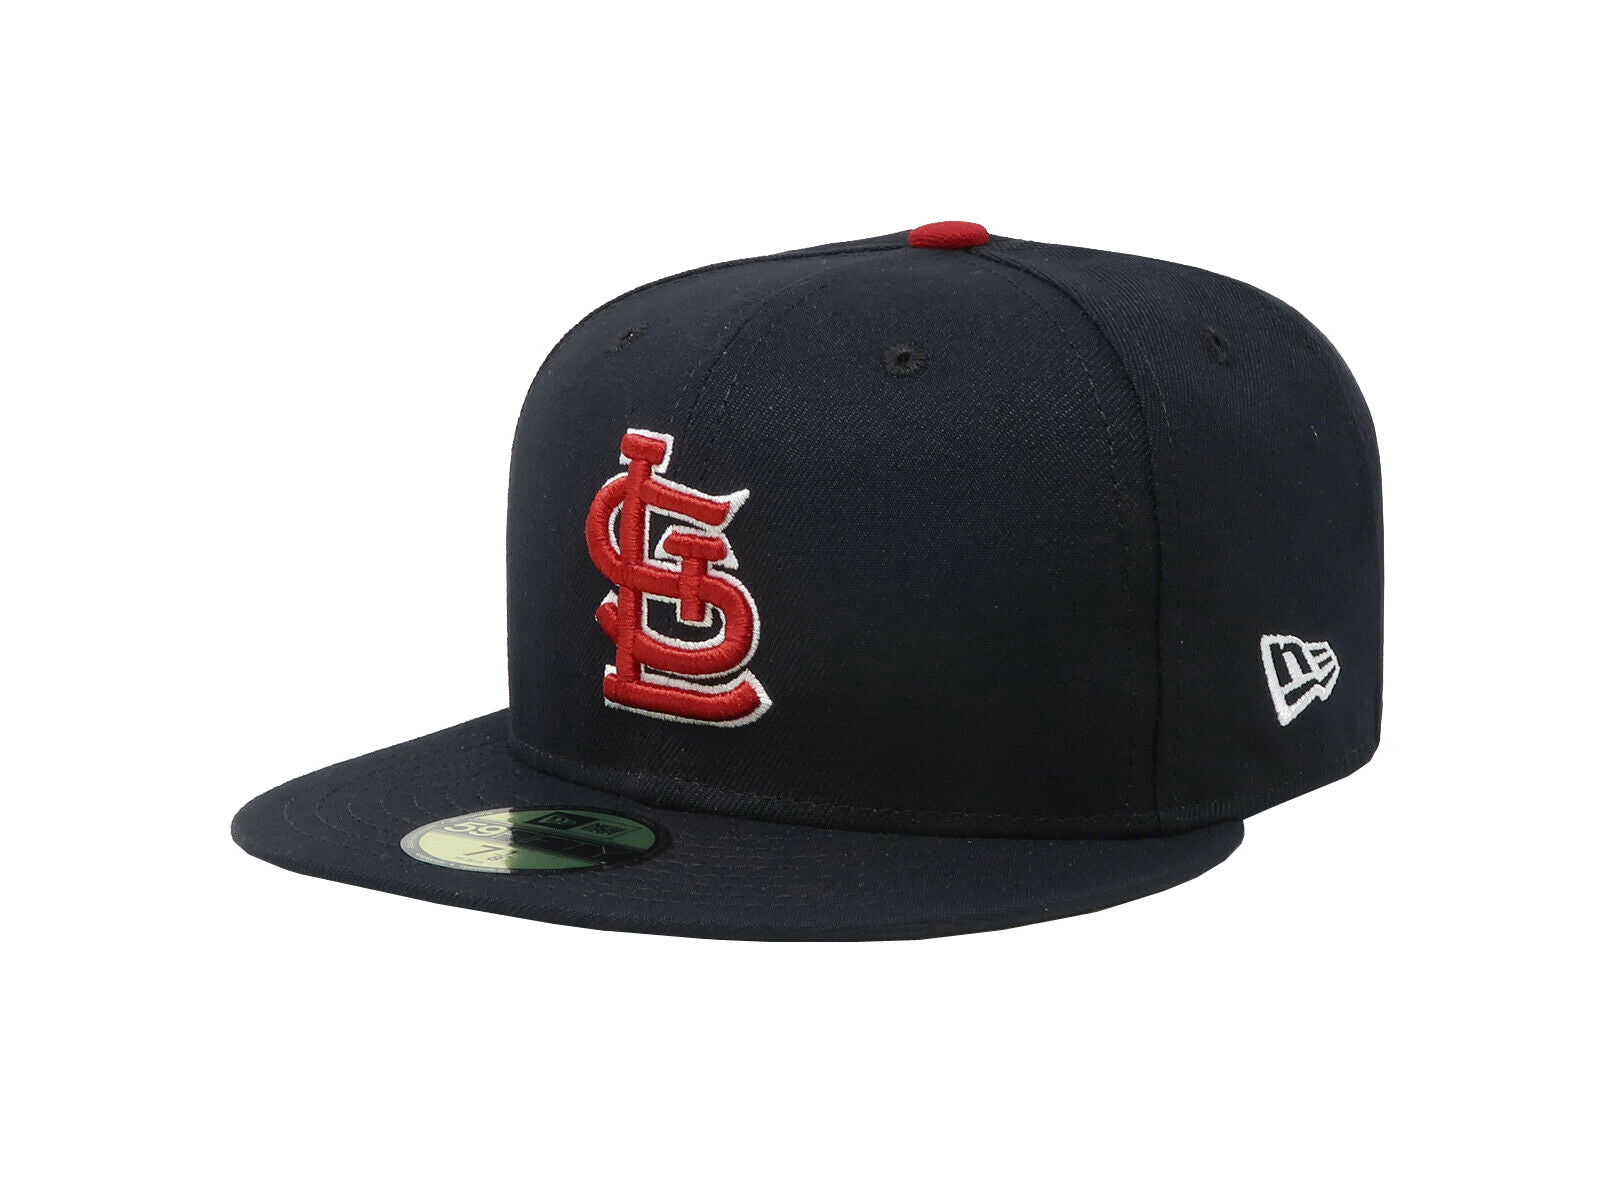 New Era 59Fifty MLB Team St. Louis Cardinal "stl" Alternate Fitted Alternate Hat